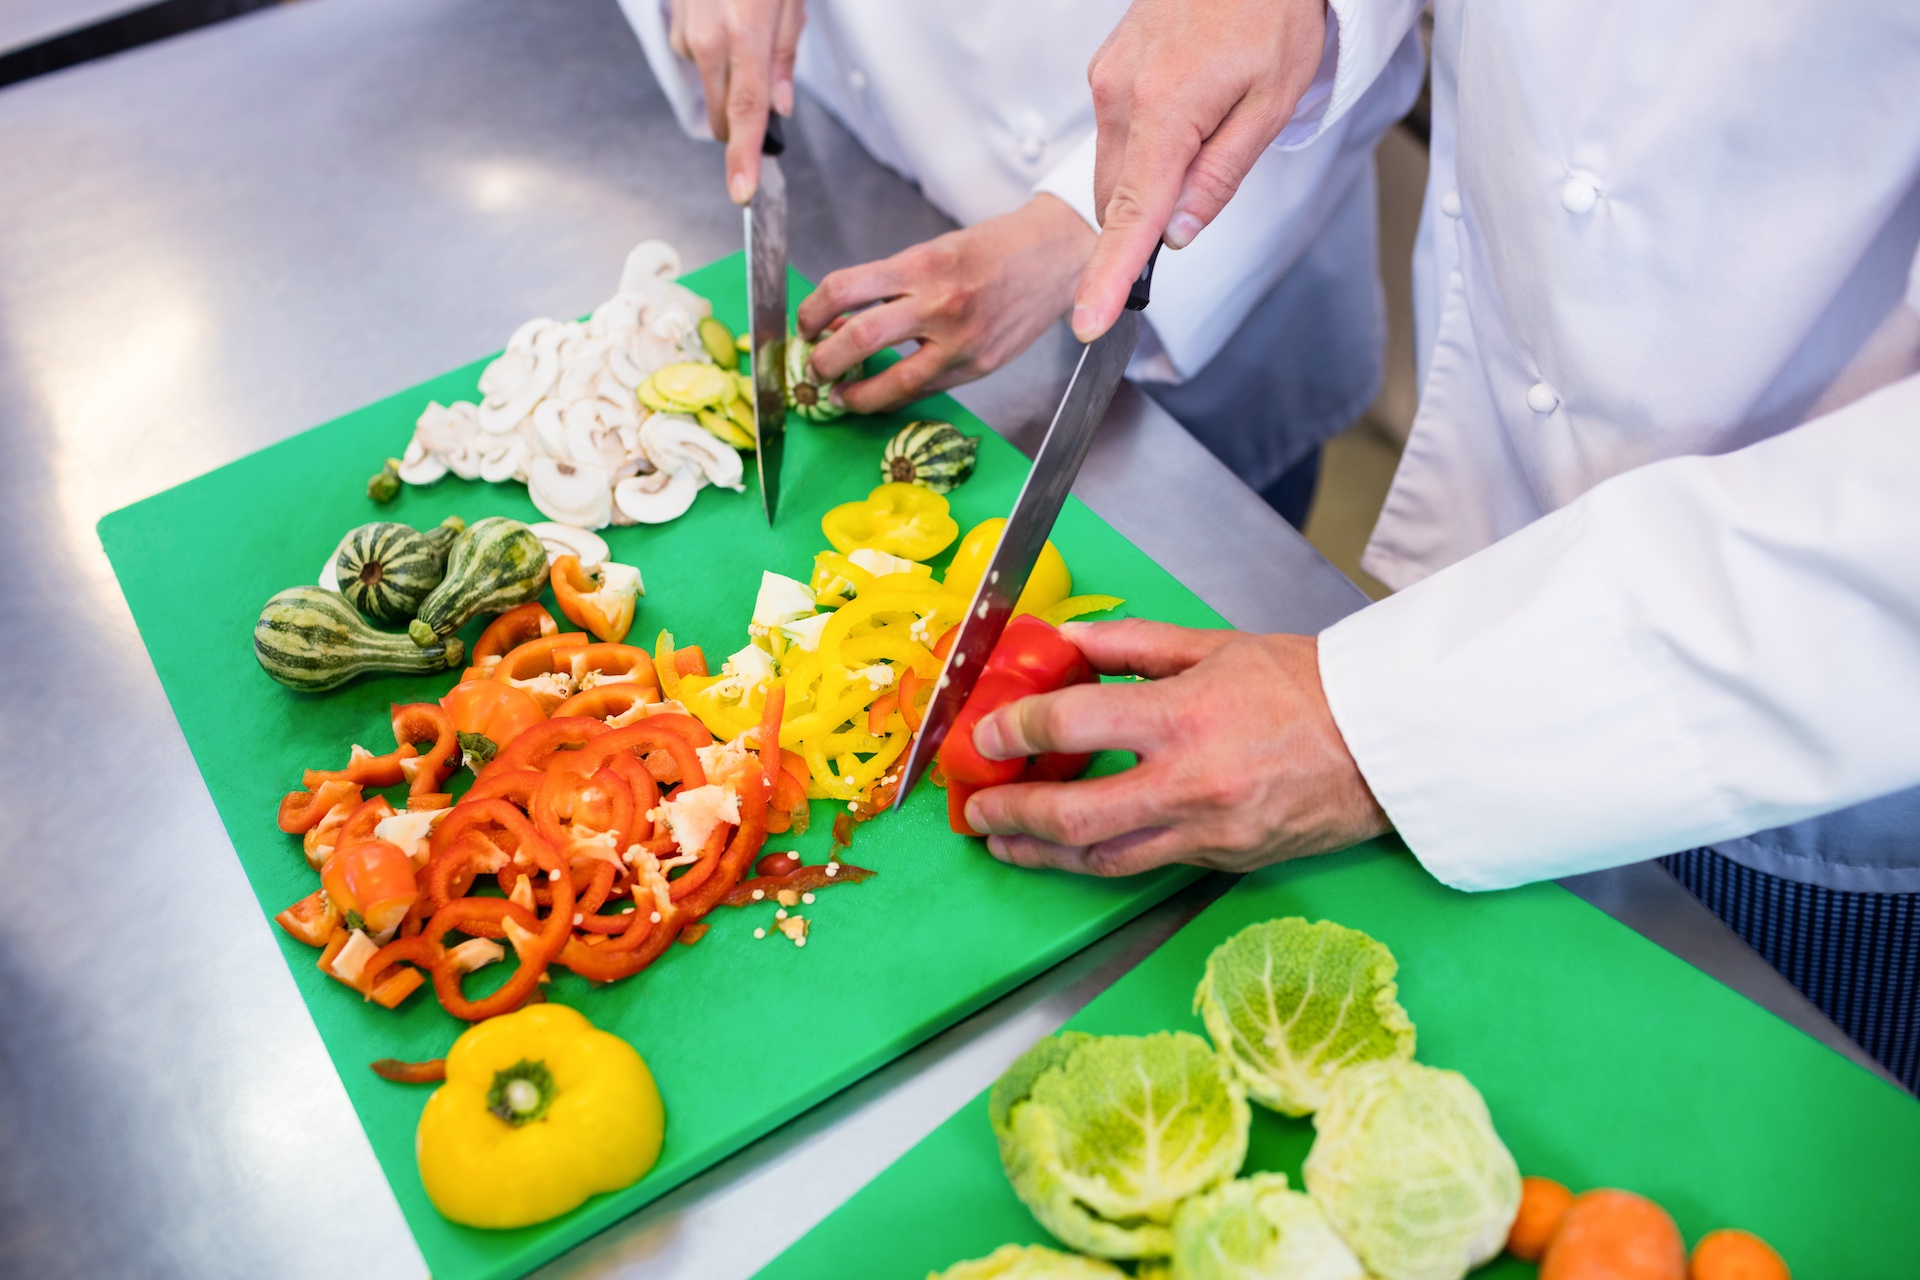 Cutting Boards Leach Microplastics into Food: Study